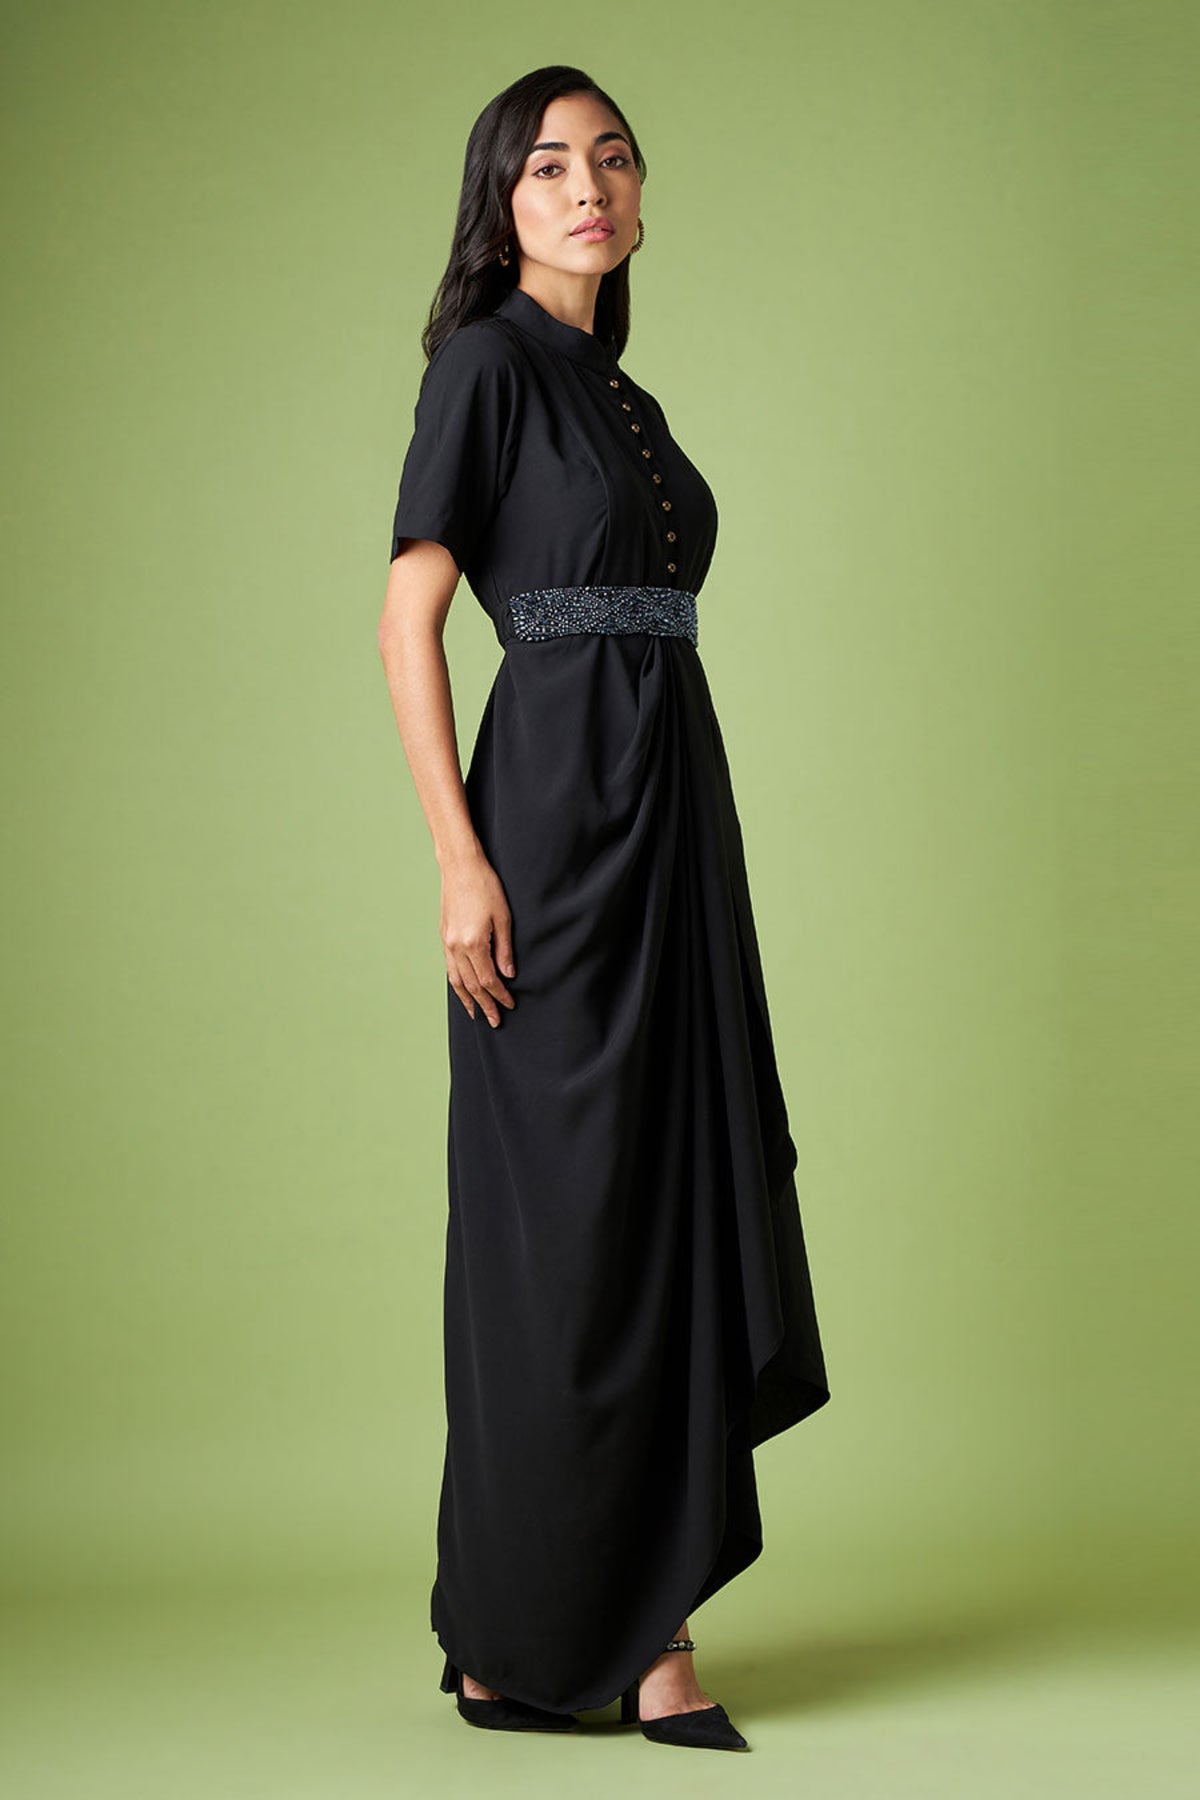 Black Drape Dress With Crysral Belt